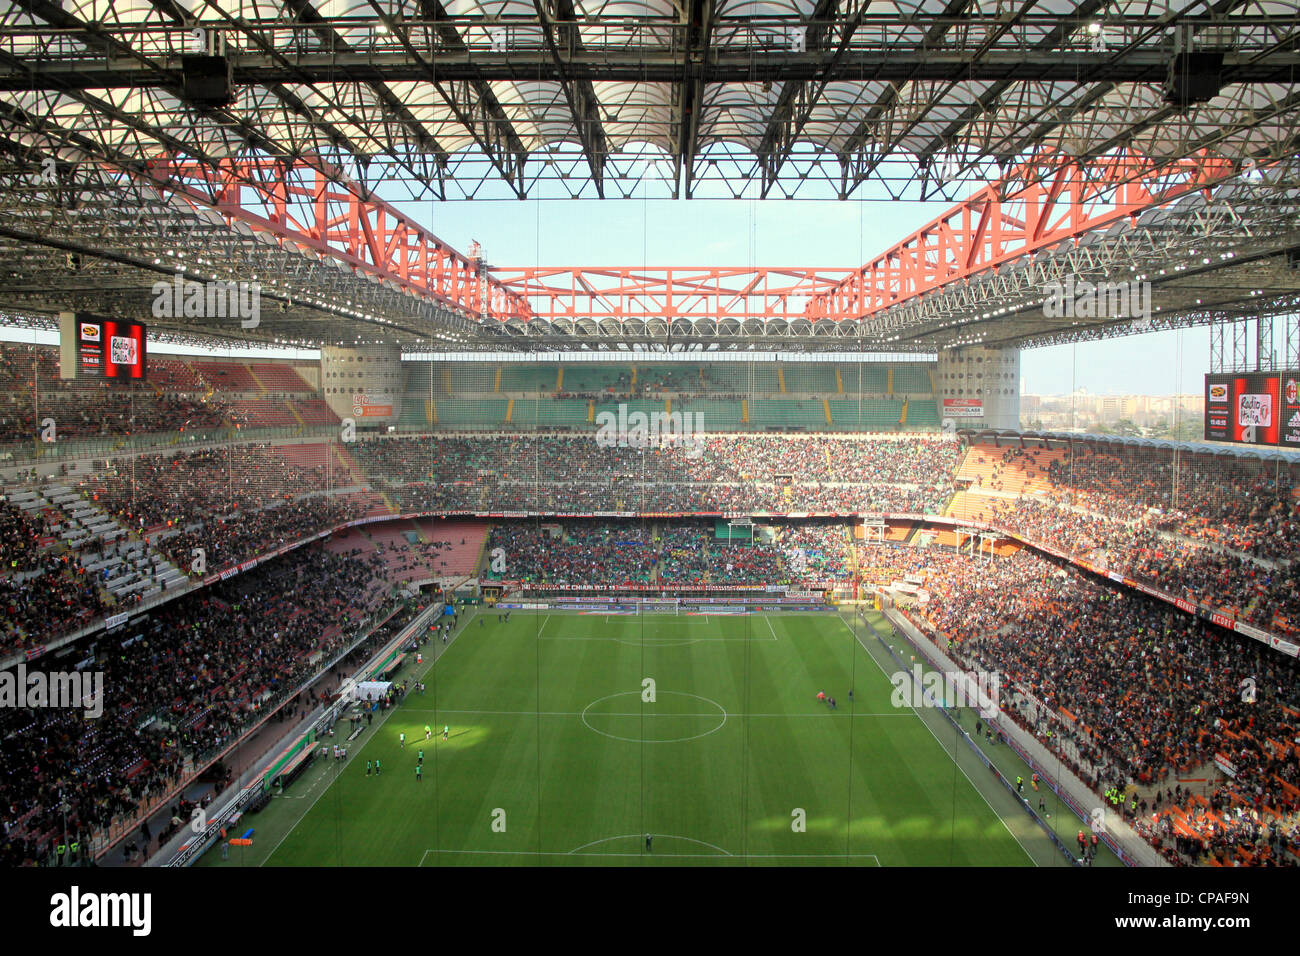 Ac milan stadium hi-res stock photography and images - Alamy